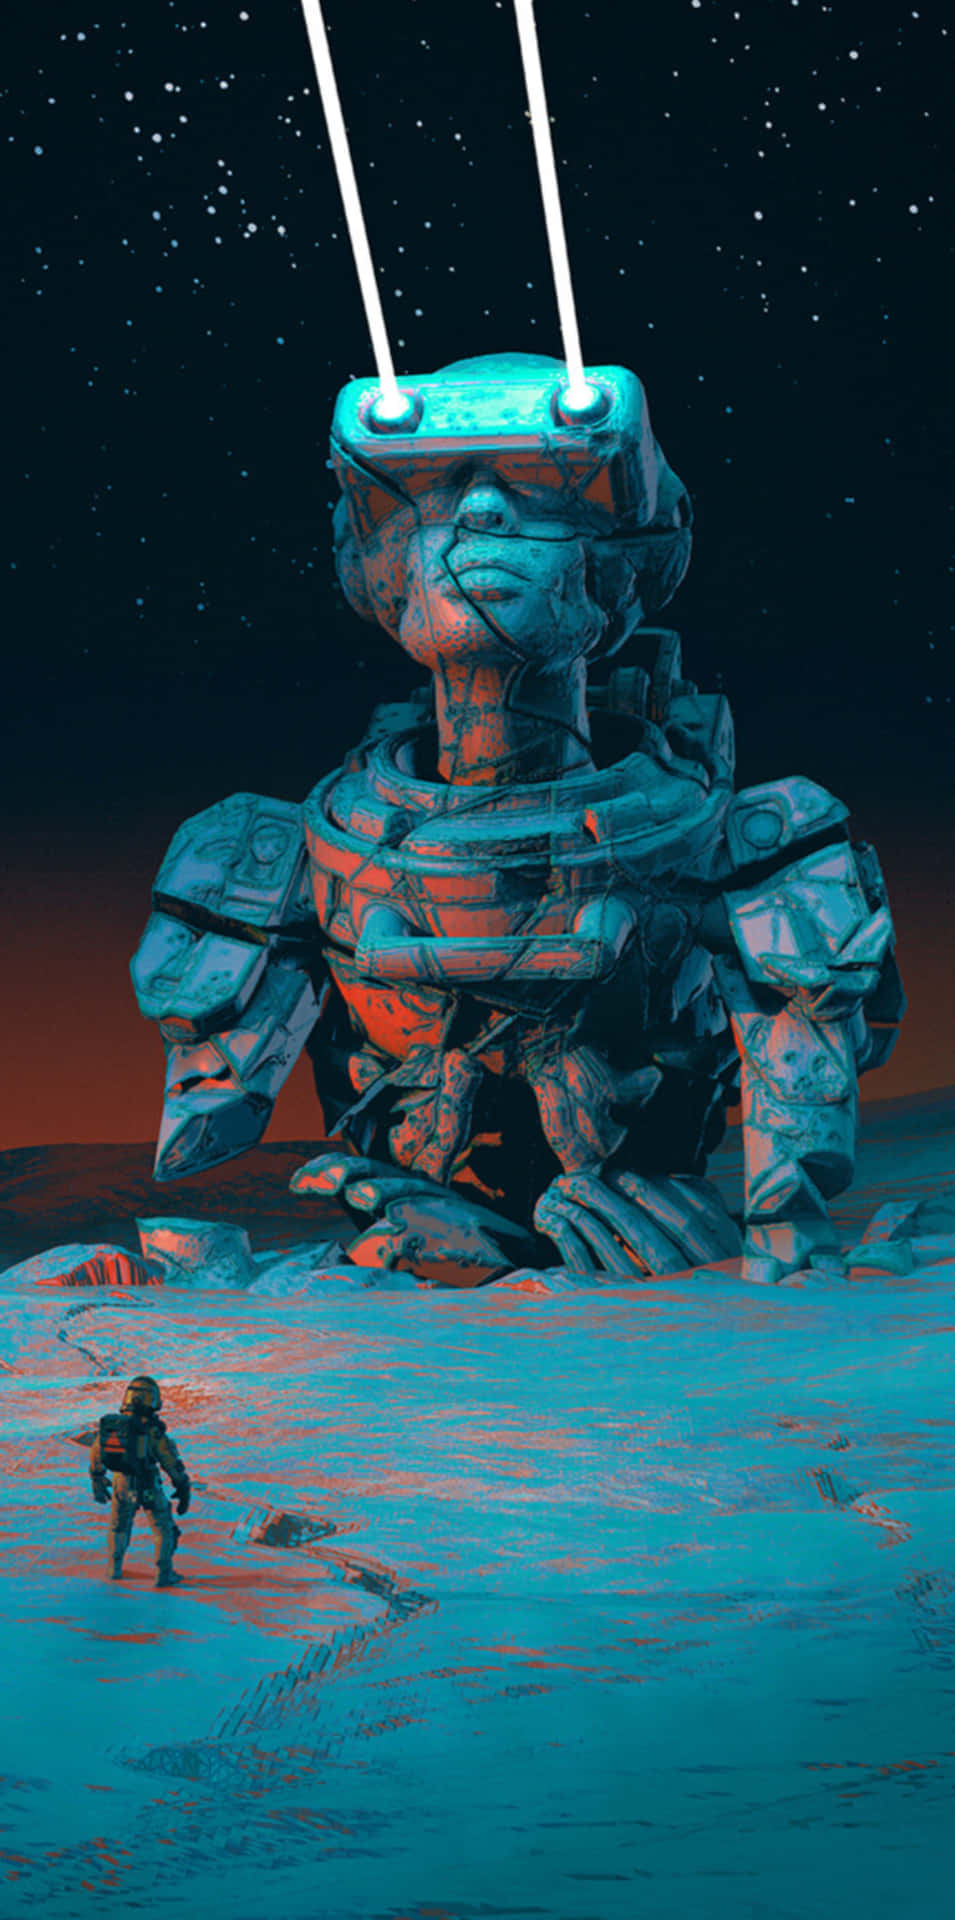 Unhombre Está Parado Frente A Un Robot En El Desierto Fondo de pantalla